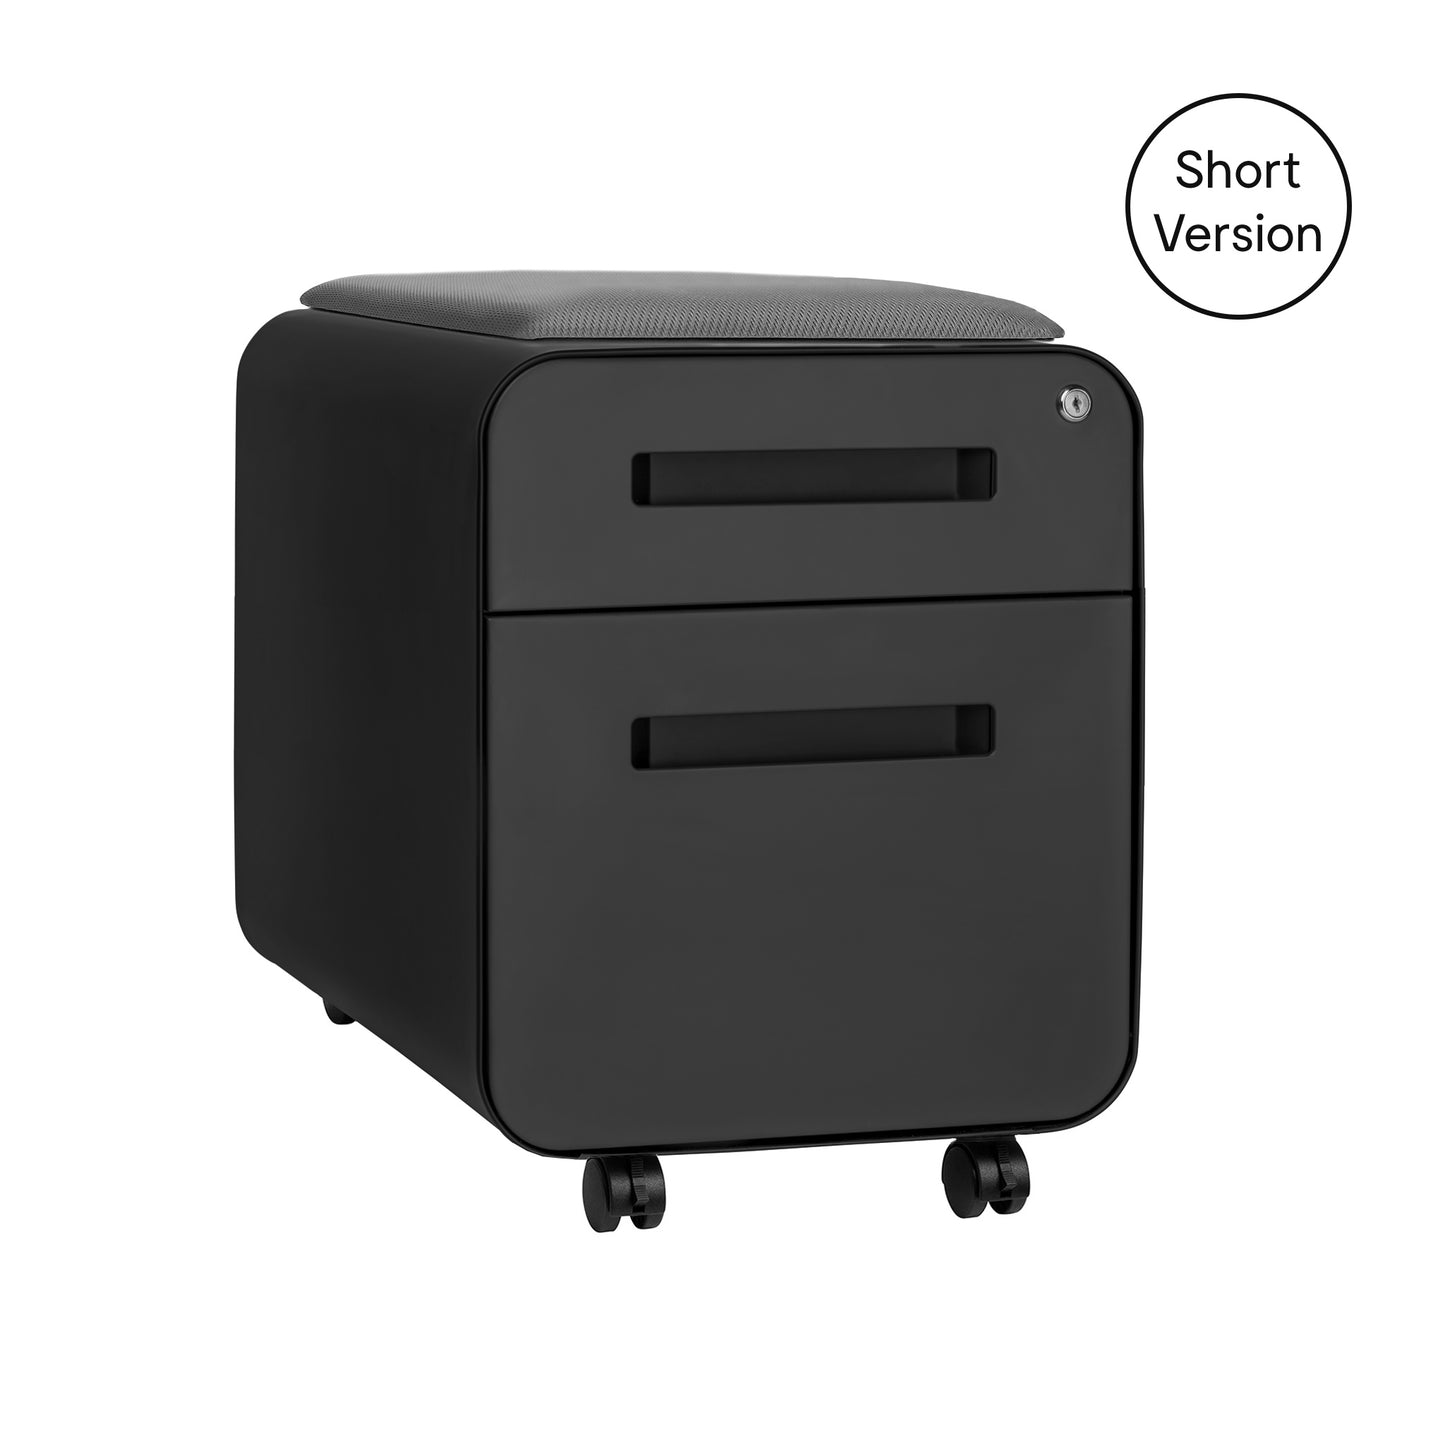 Stockpile Mini 2-Drawer File Cabinet (Black)